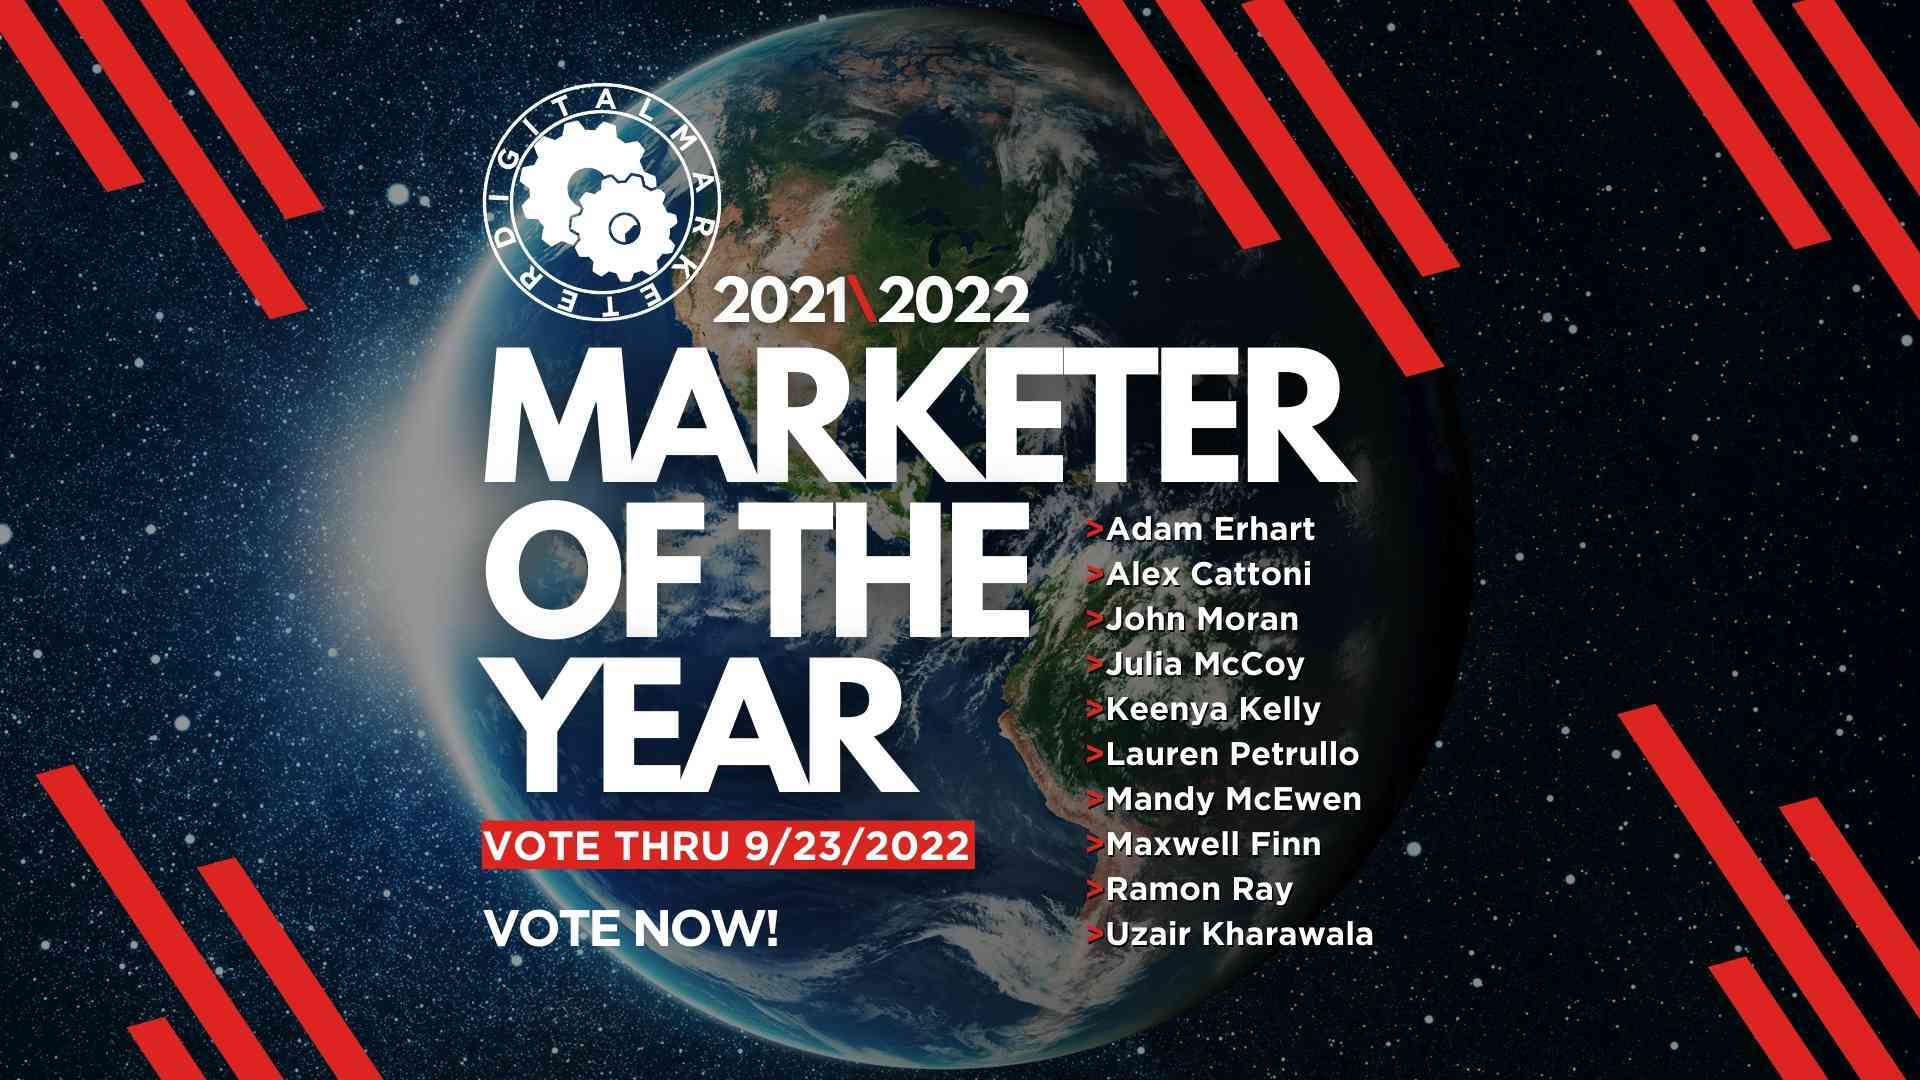 DigitalMarketer Marketer of the Year 2021/2022